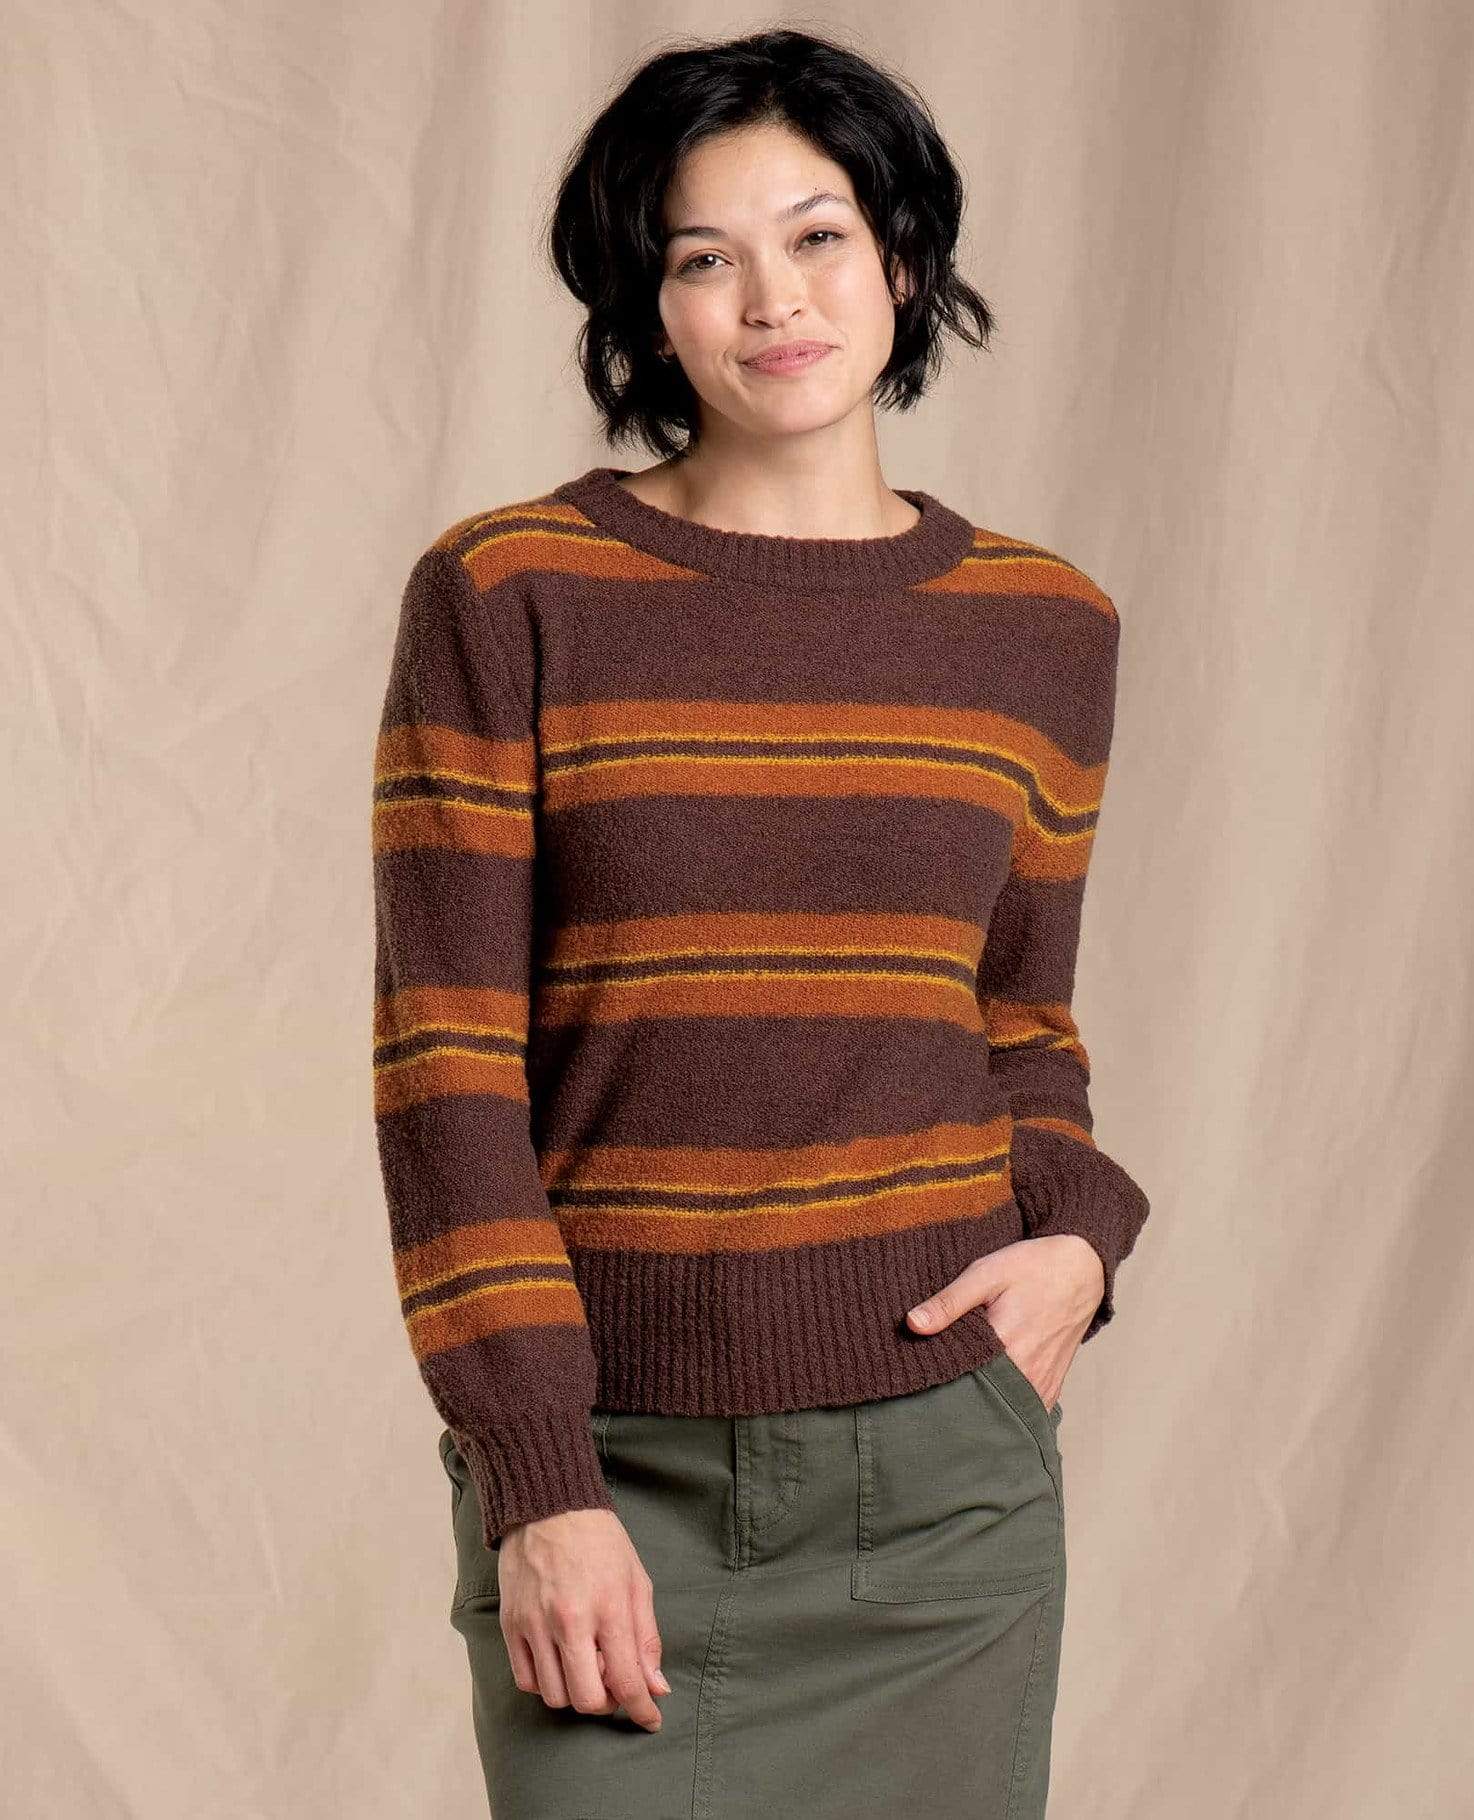  Mahogany Toad & Co, Women's Cotati Crew Sweater (Burnt Sienna Orange)